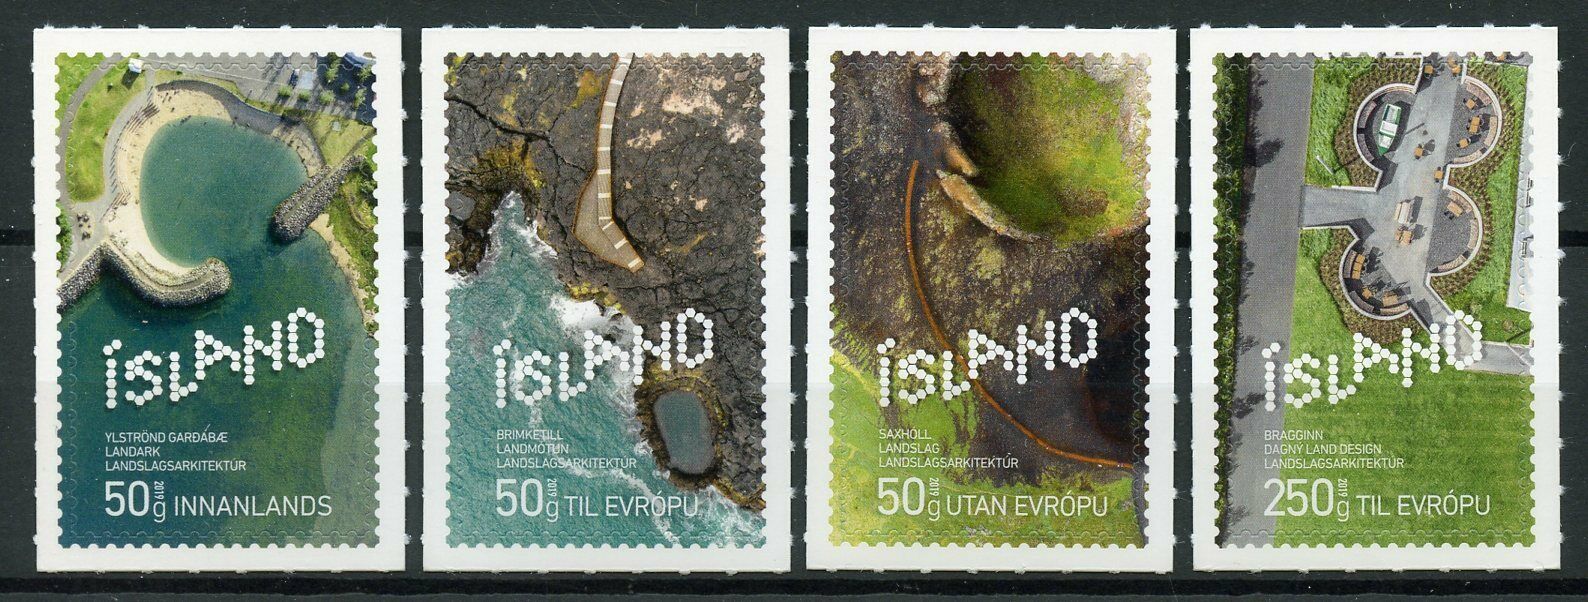 Iceland 2019 MNH Contemporary Design IX Landscape Architecture 4v S/A Set Stamps